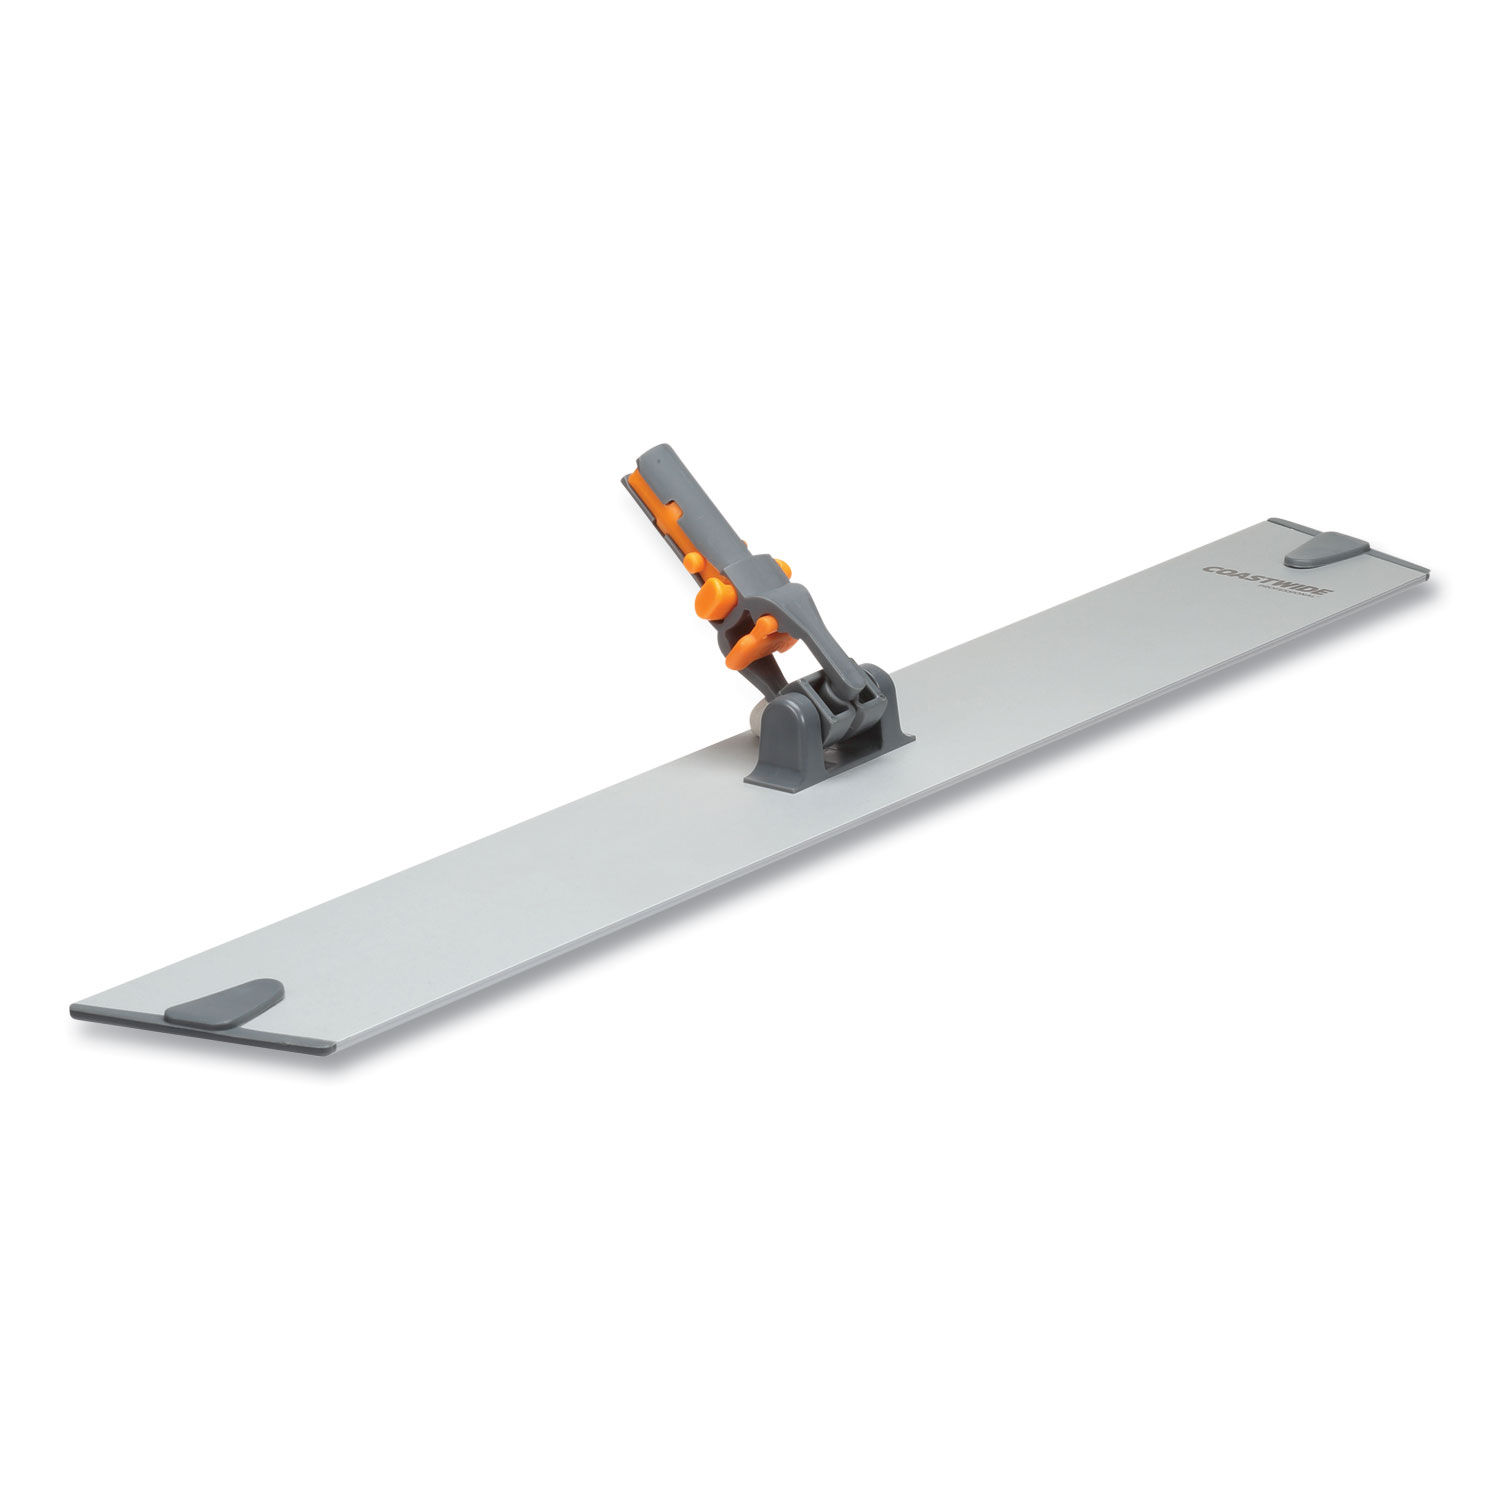 Wet/Dry Microfiber Mop Frame 22" x 3.15", Aluminum/Plastic, Gray/Orange